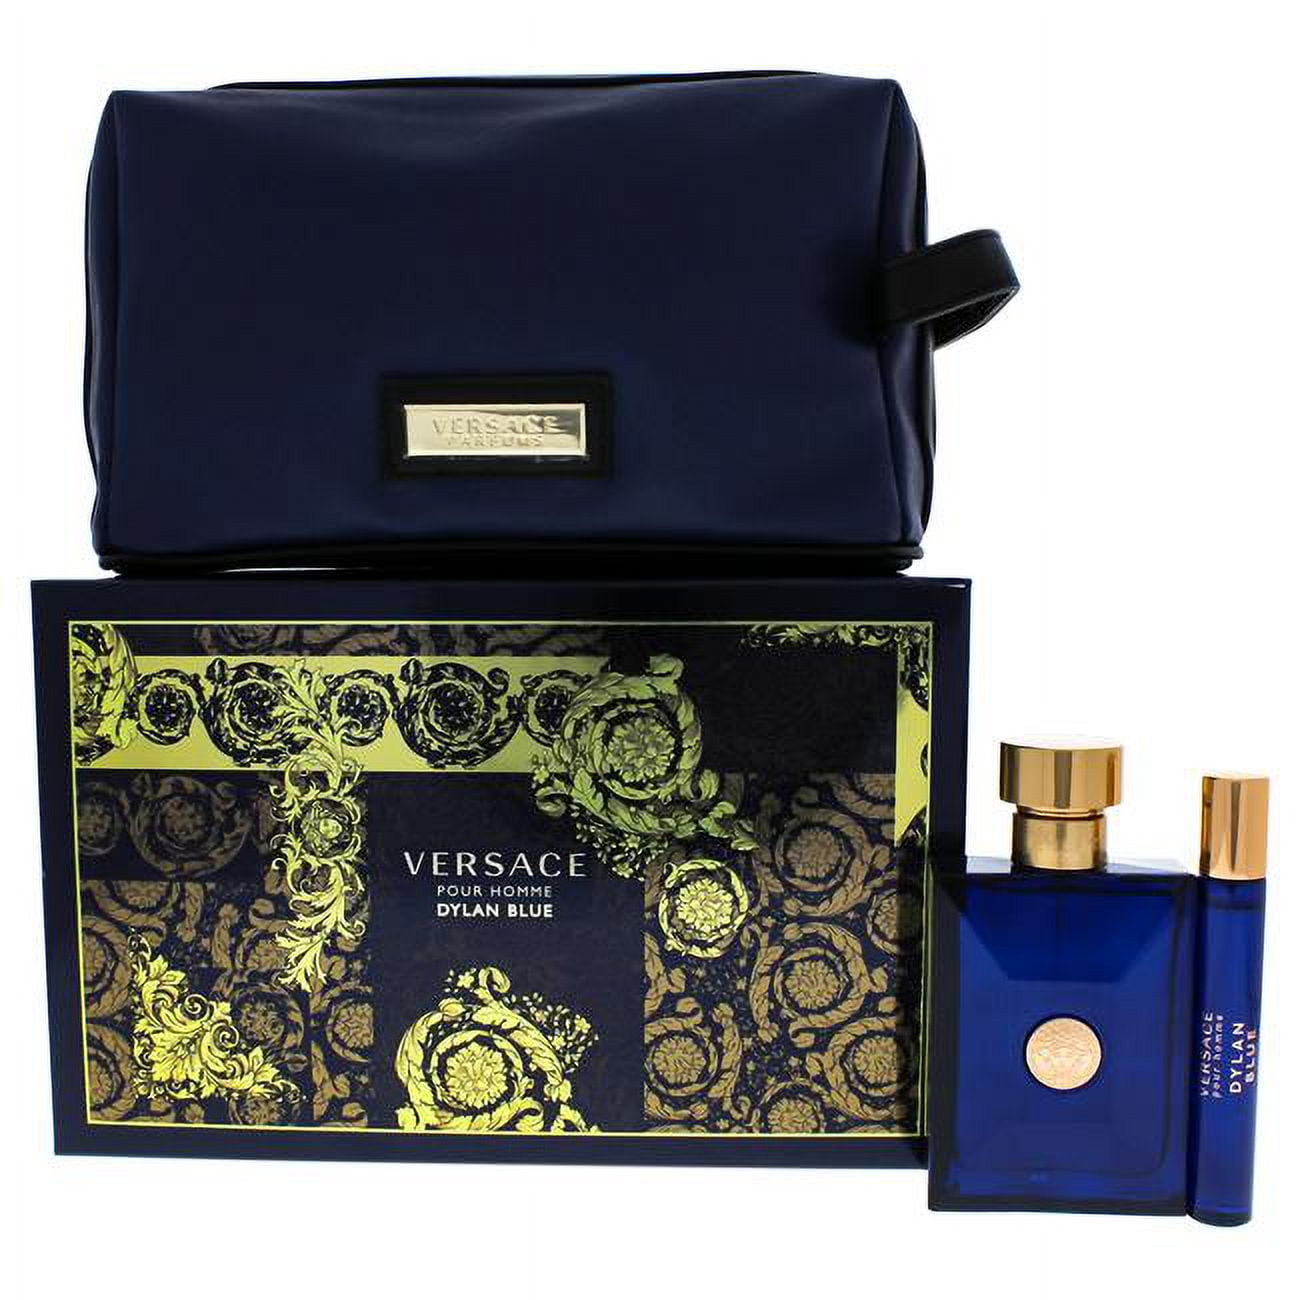 Versace Dylan Blue Pour Homme Cologne Gift Set for Men, e Pieces 